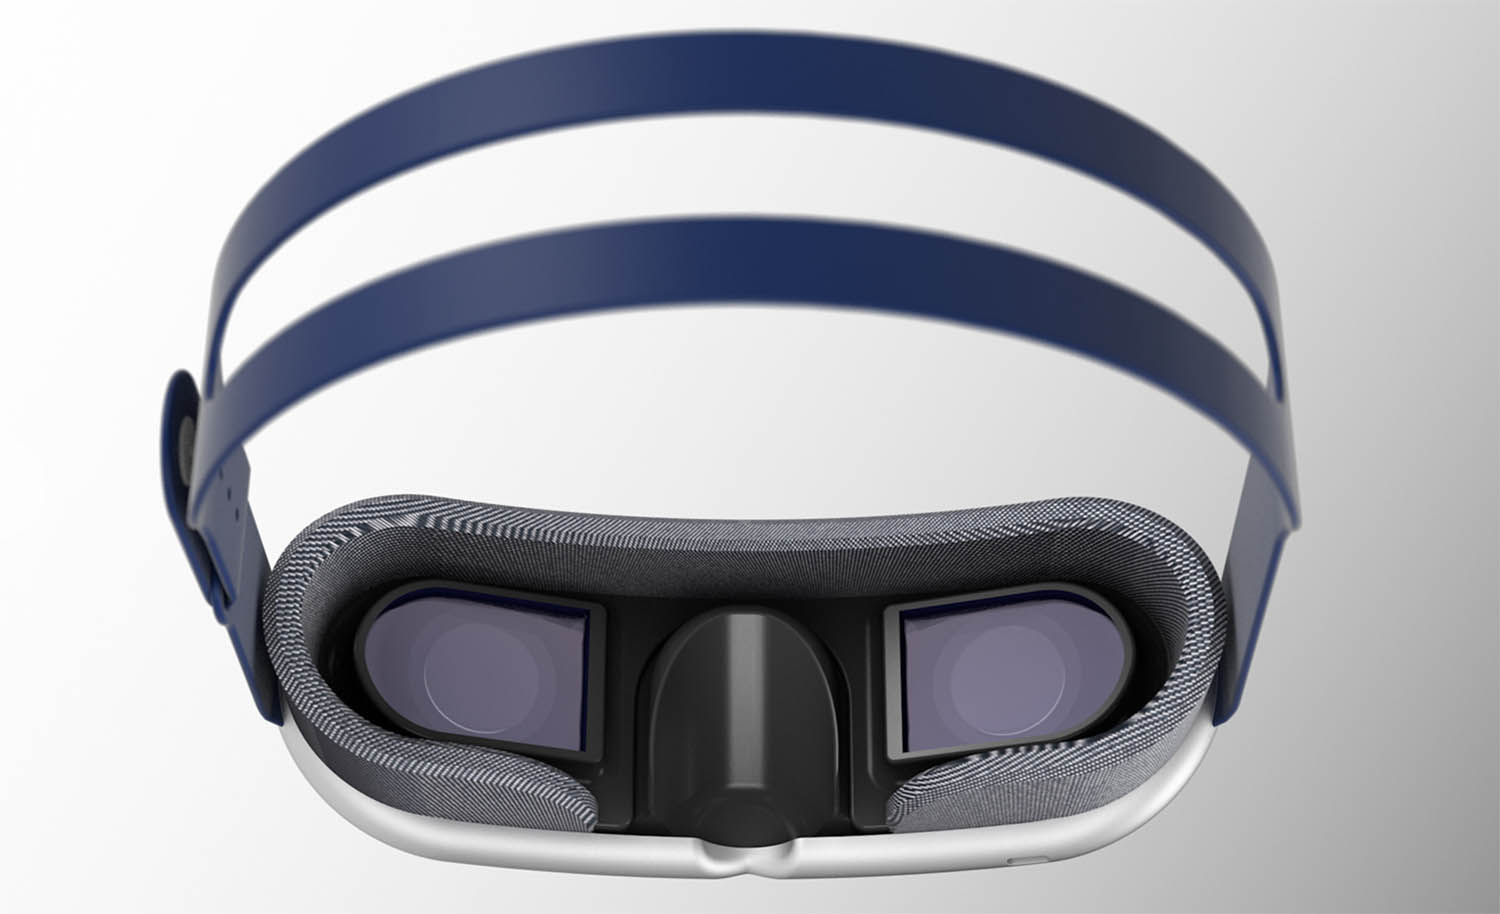 Apple augmented reality kit